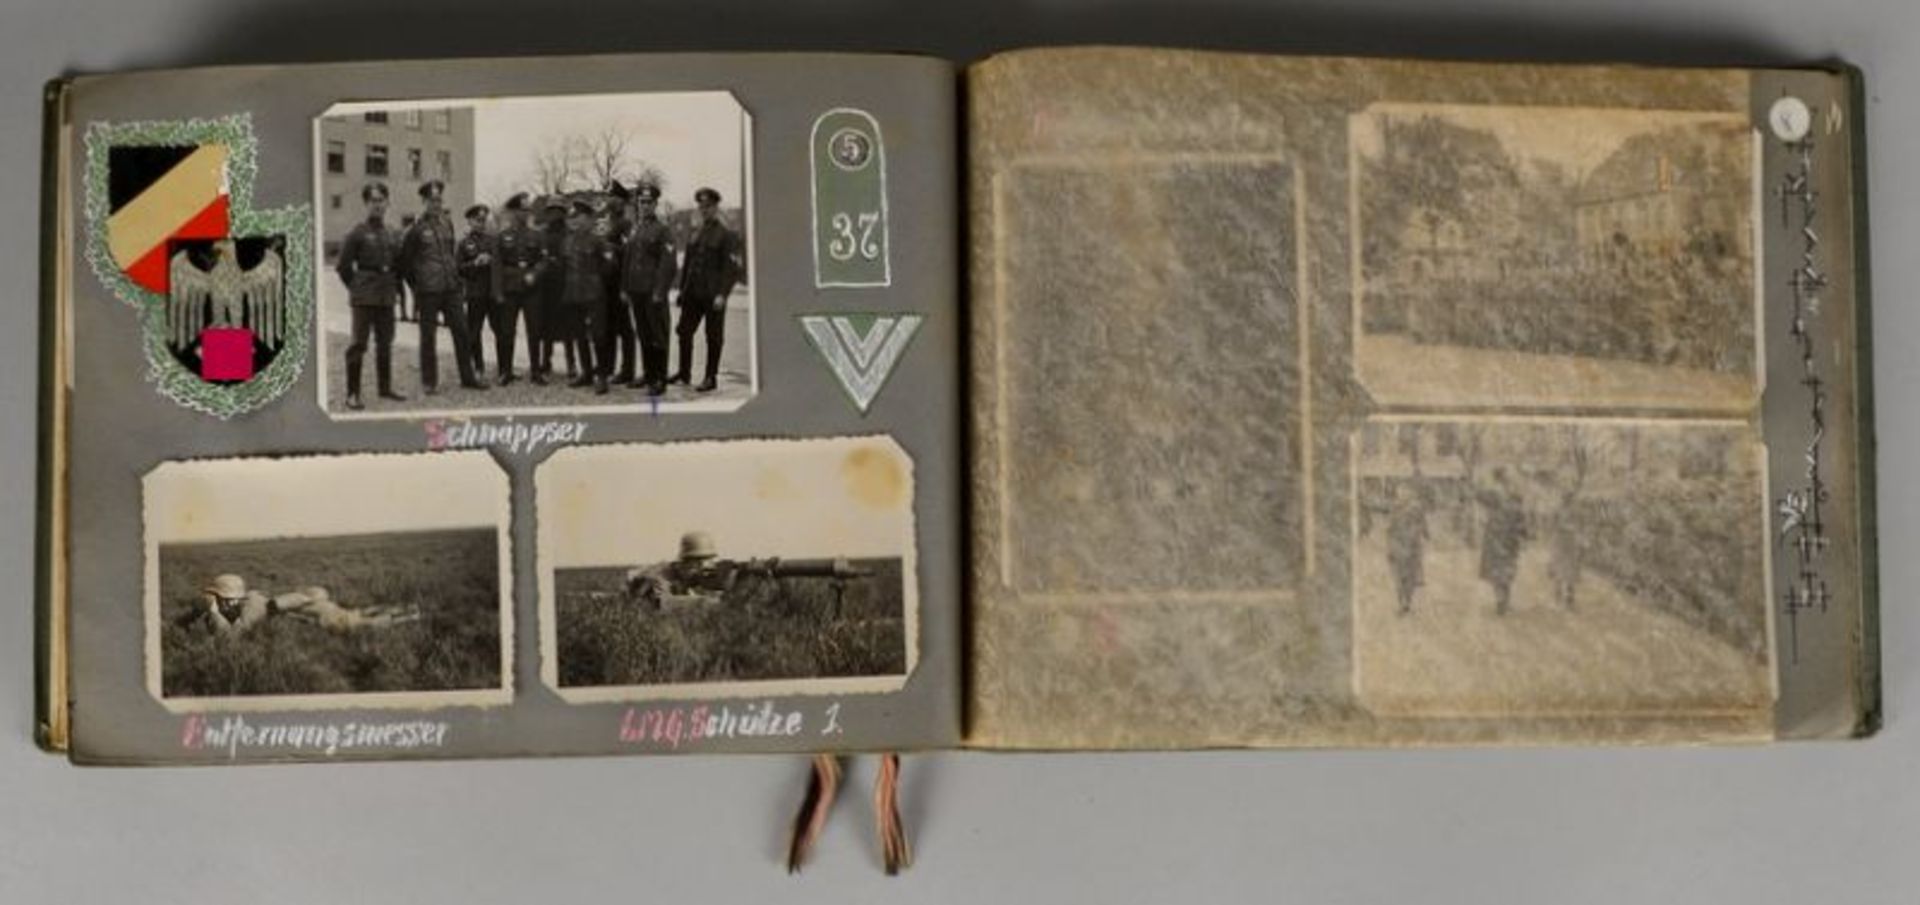 Fotografien (II. WK): &#039;5. Kompanie-Infanterie-Regiment 37&#039;, im Album gesammelt